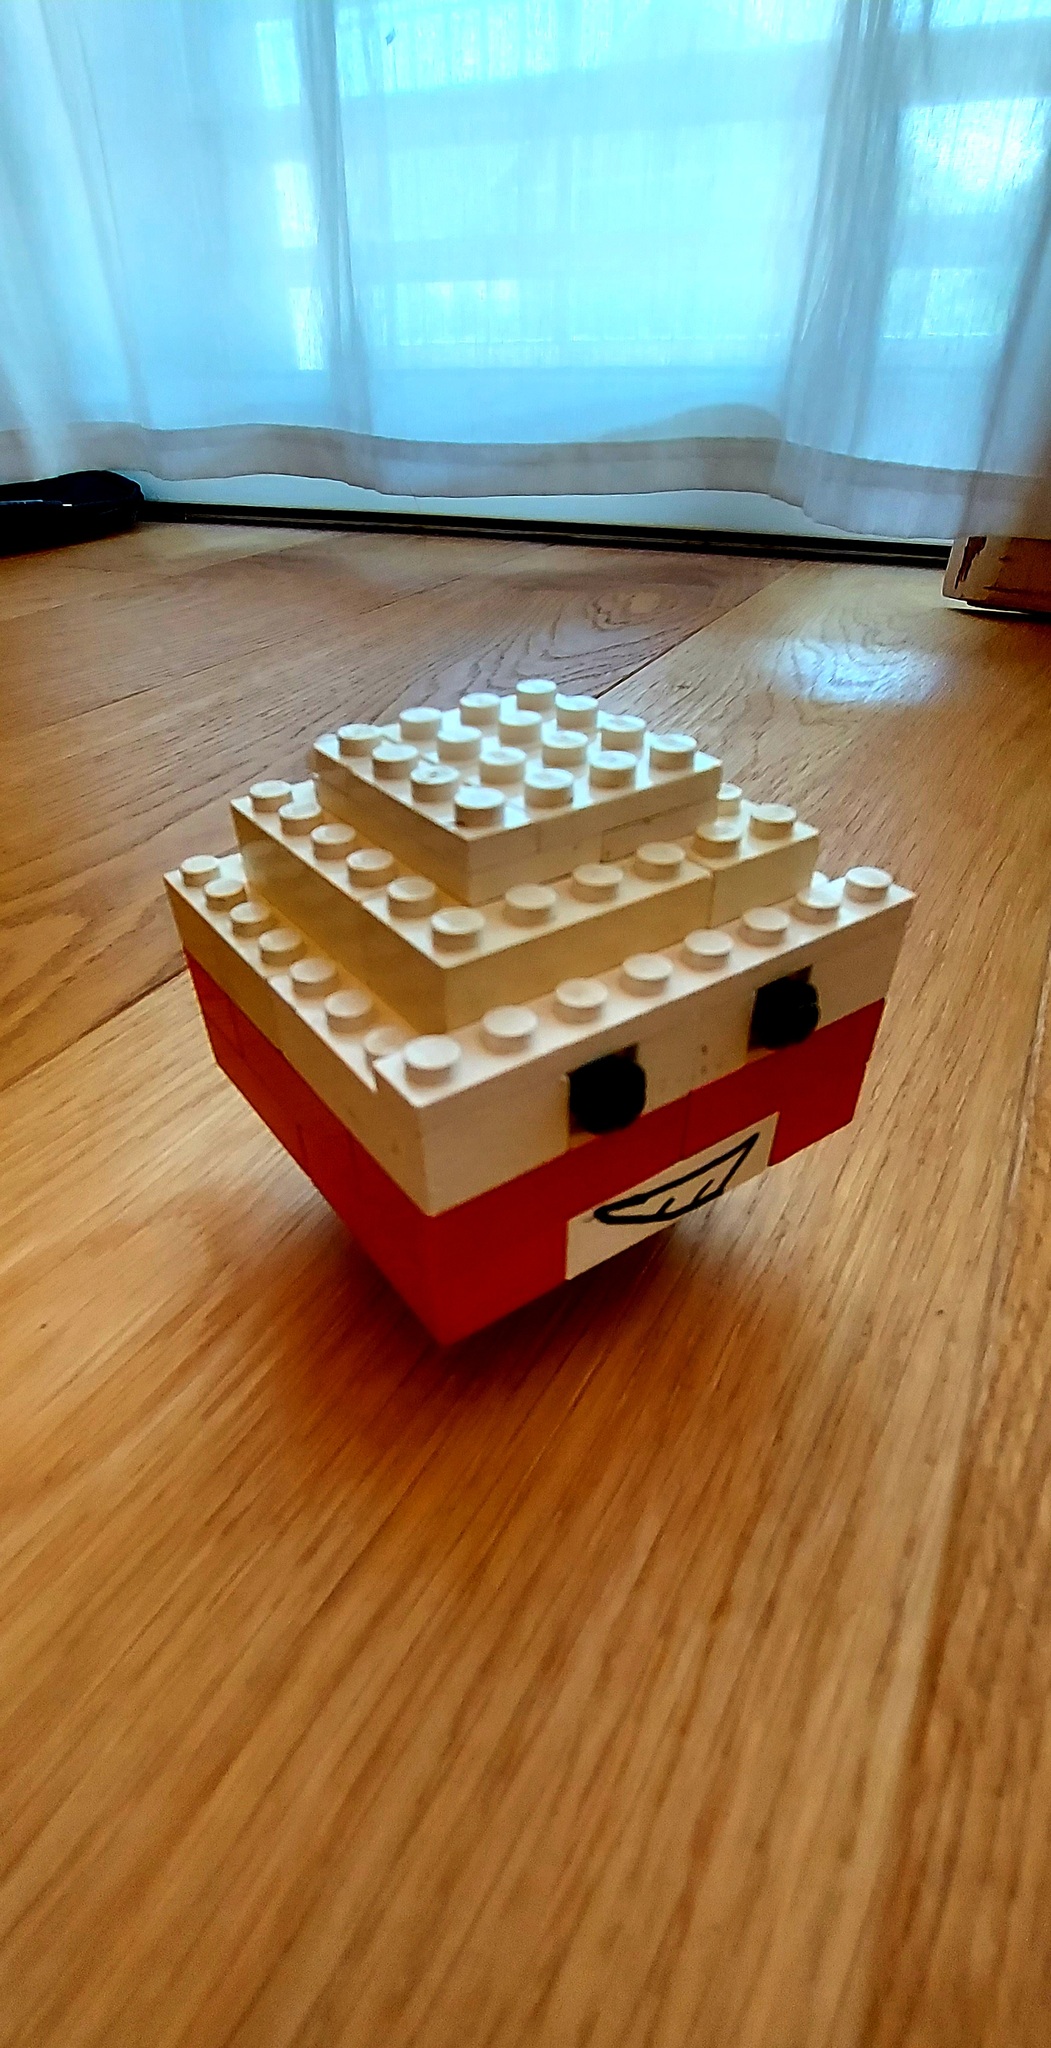 Lego-Lektrobal